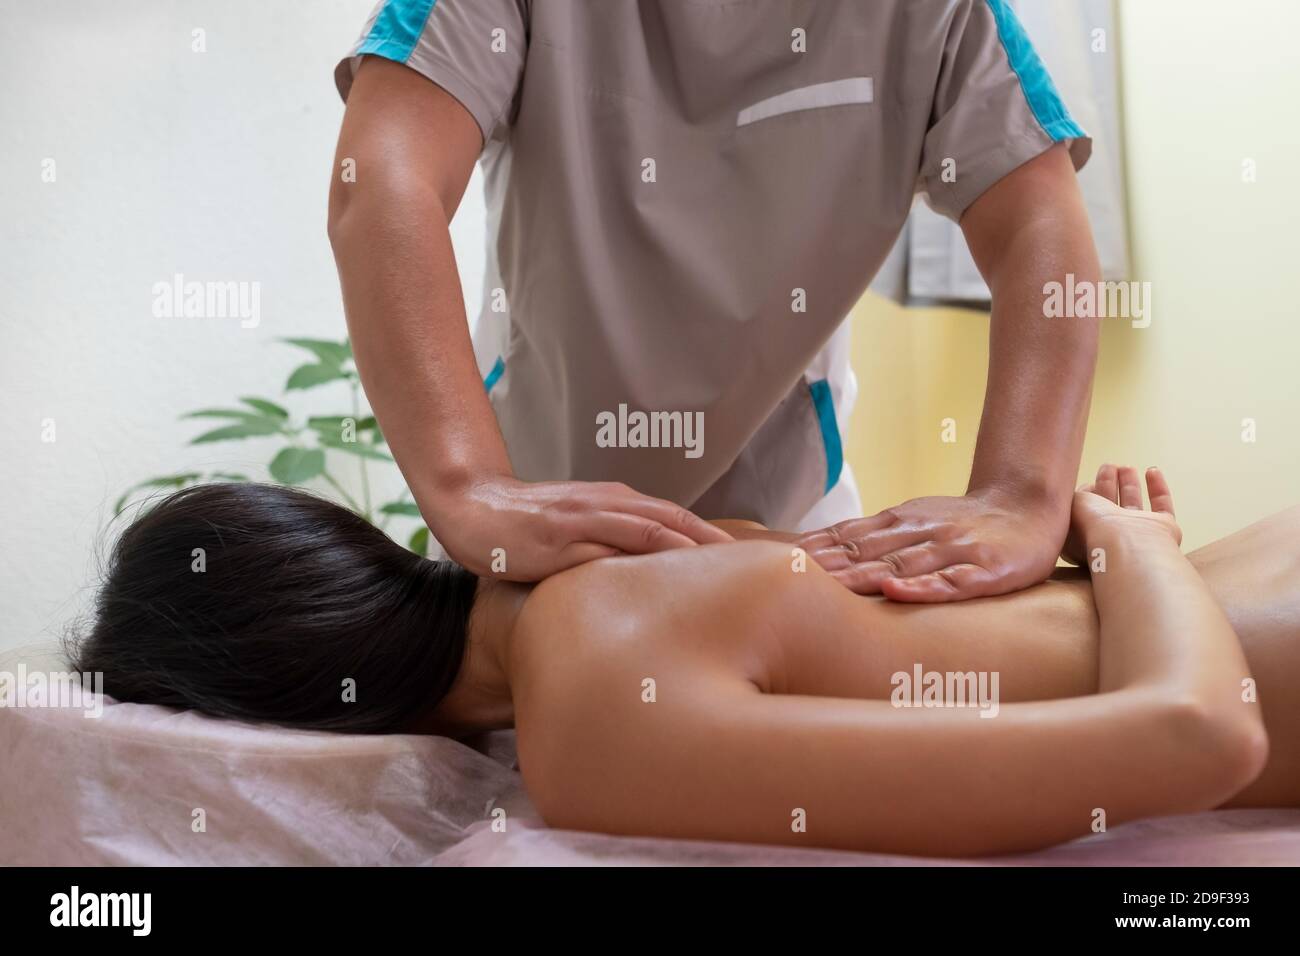 Caucasian woman getting a spine massage in the spa salon Stock Photo